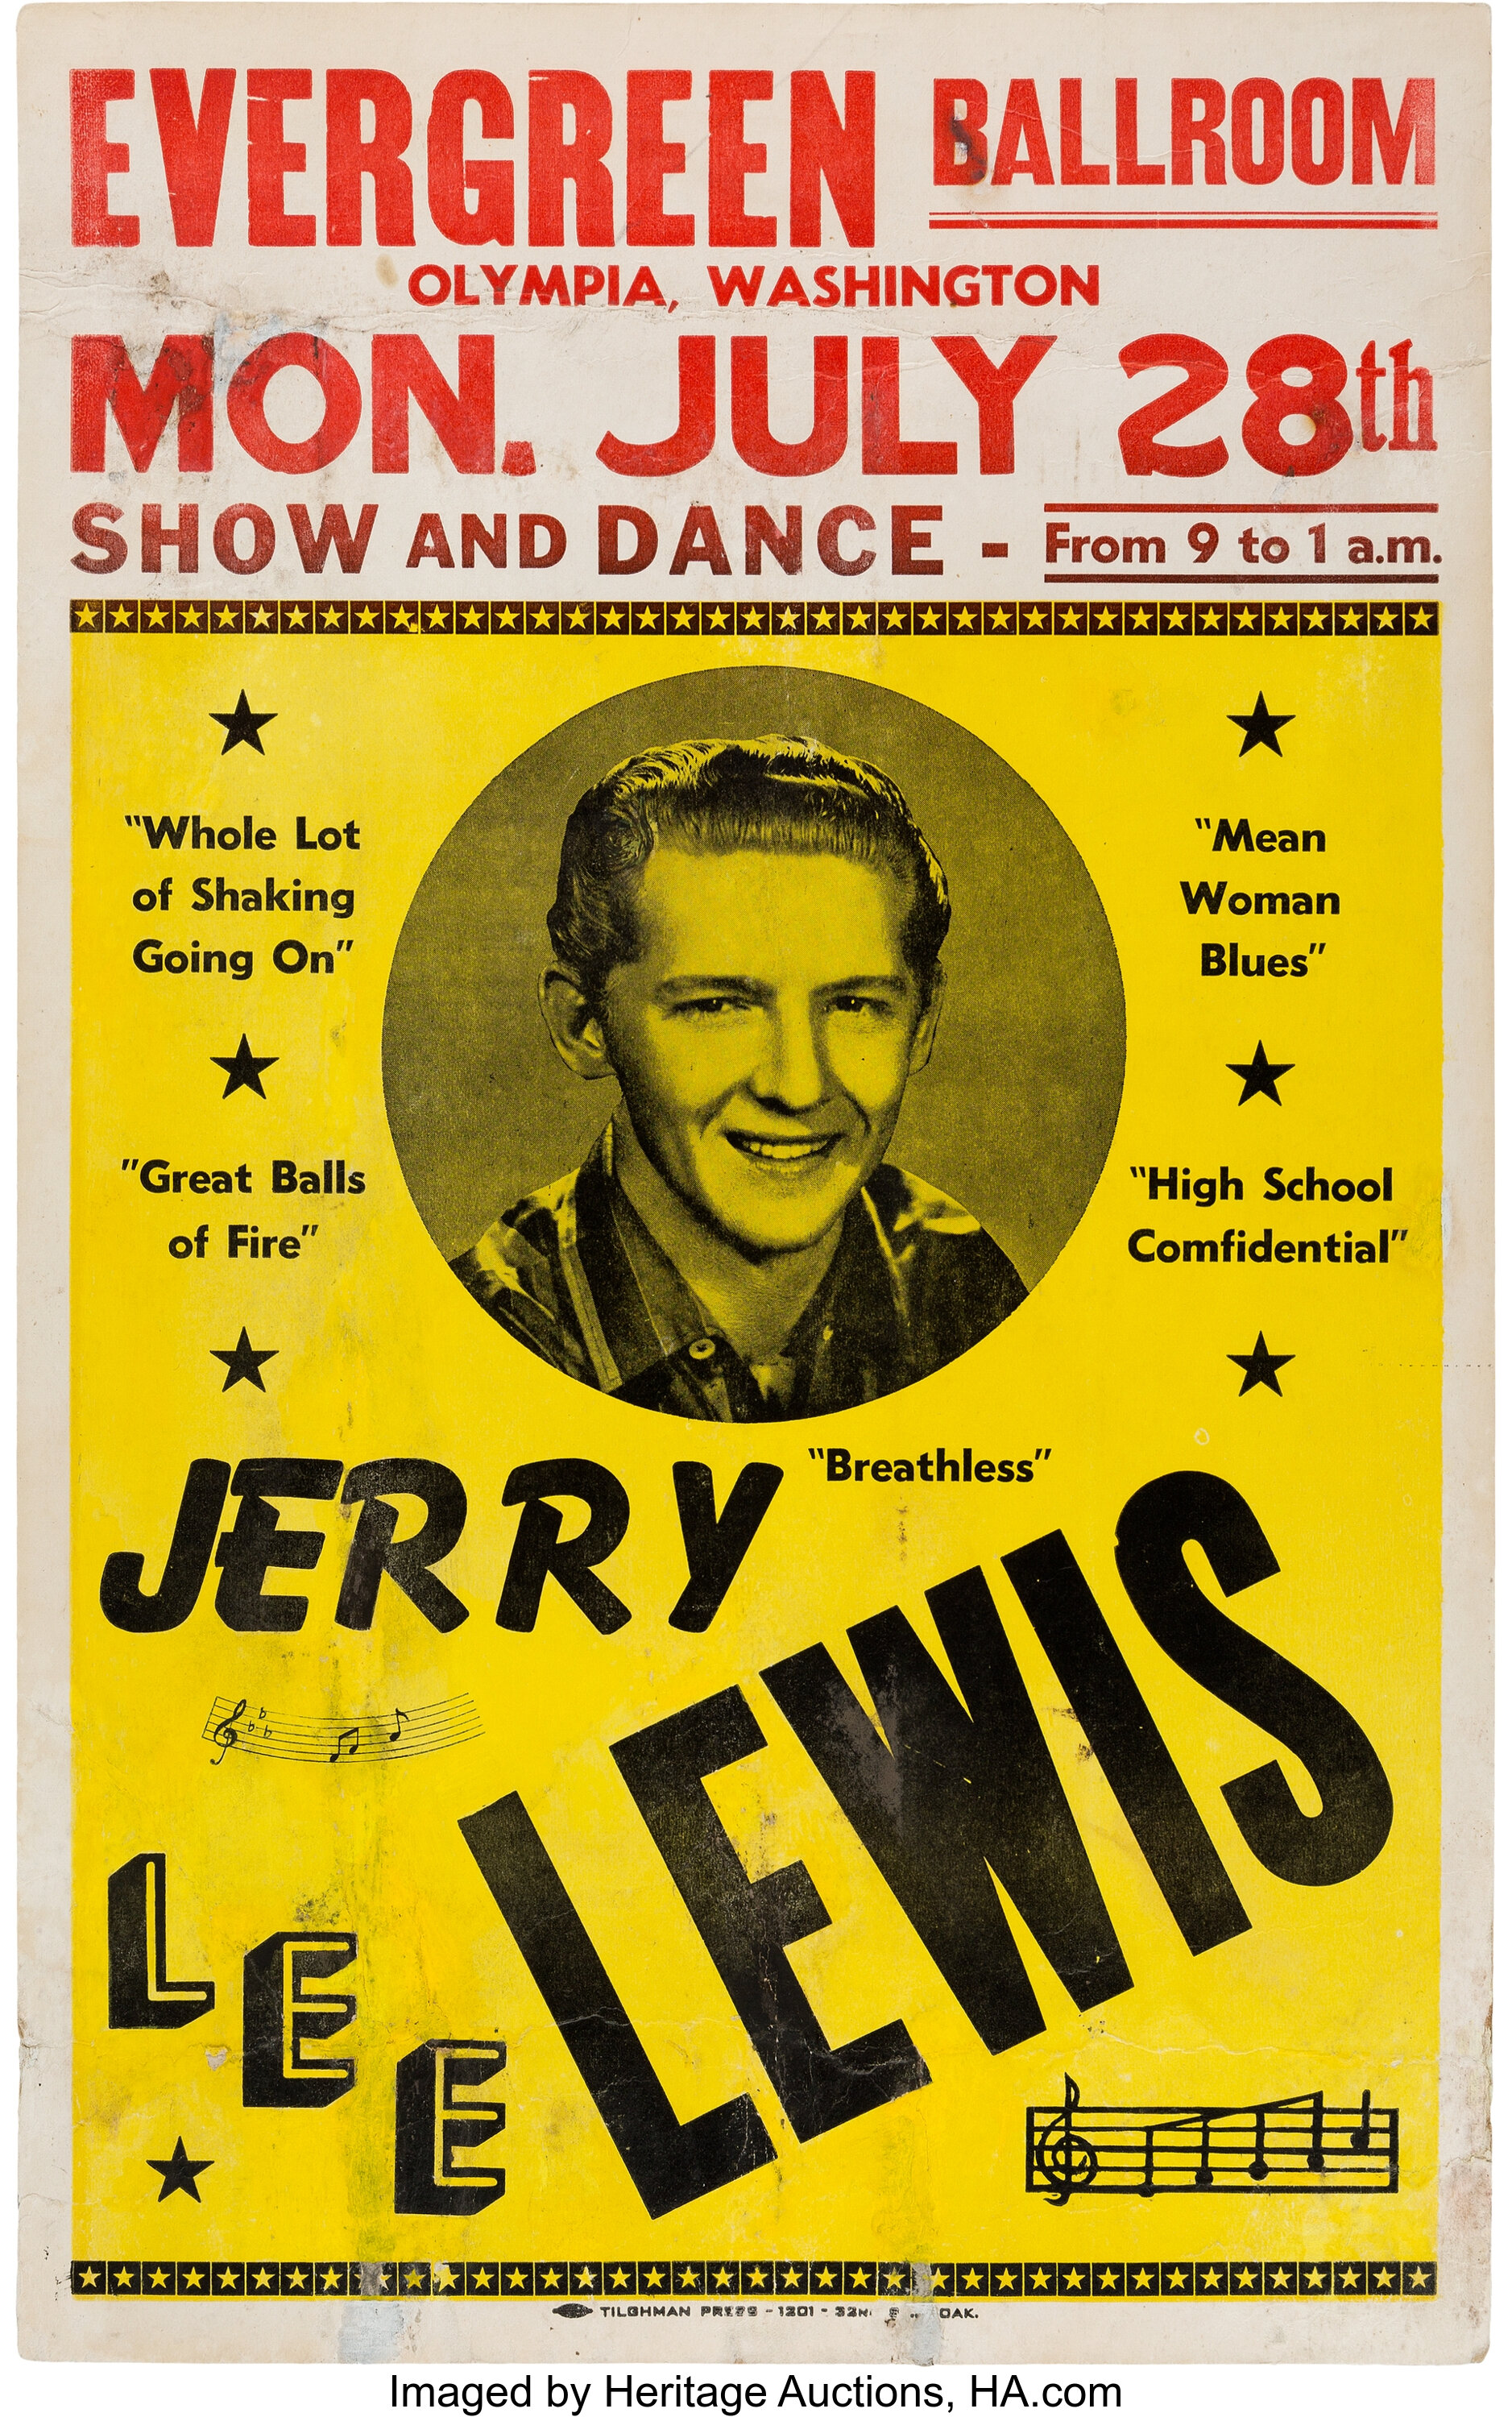 Jerry Lee Lewis Evergreen Ballroom Concert Poster (1958